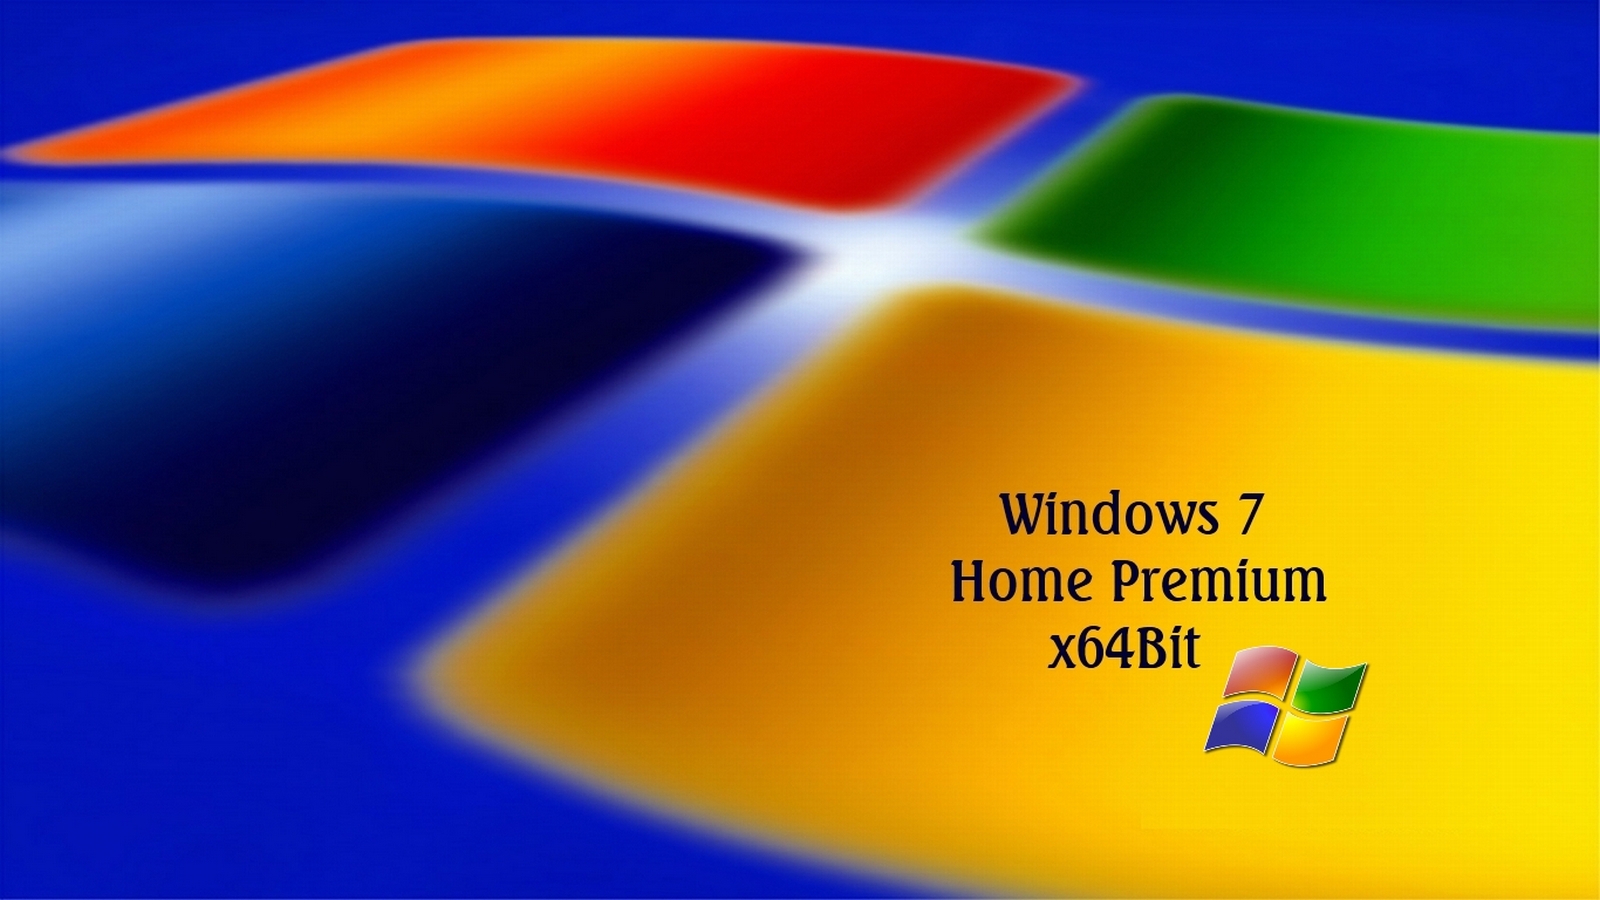 cura 15.04.6 download windows 7 64bit